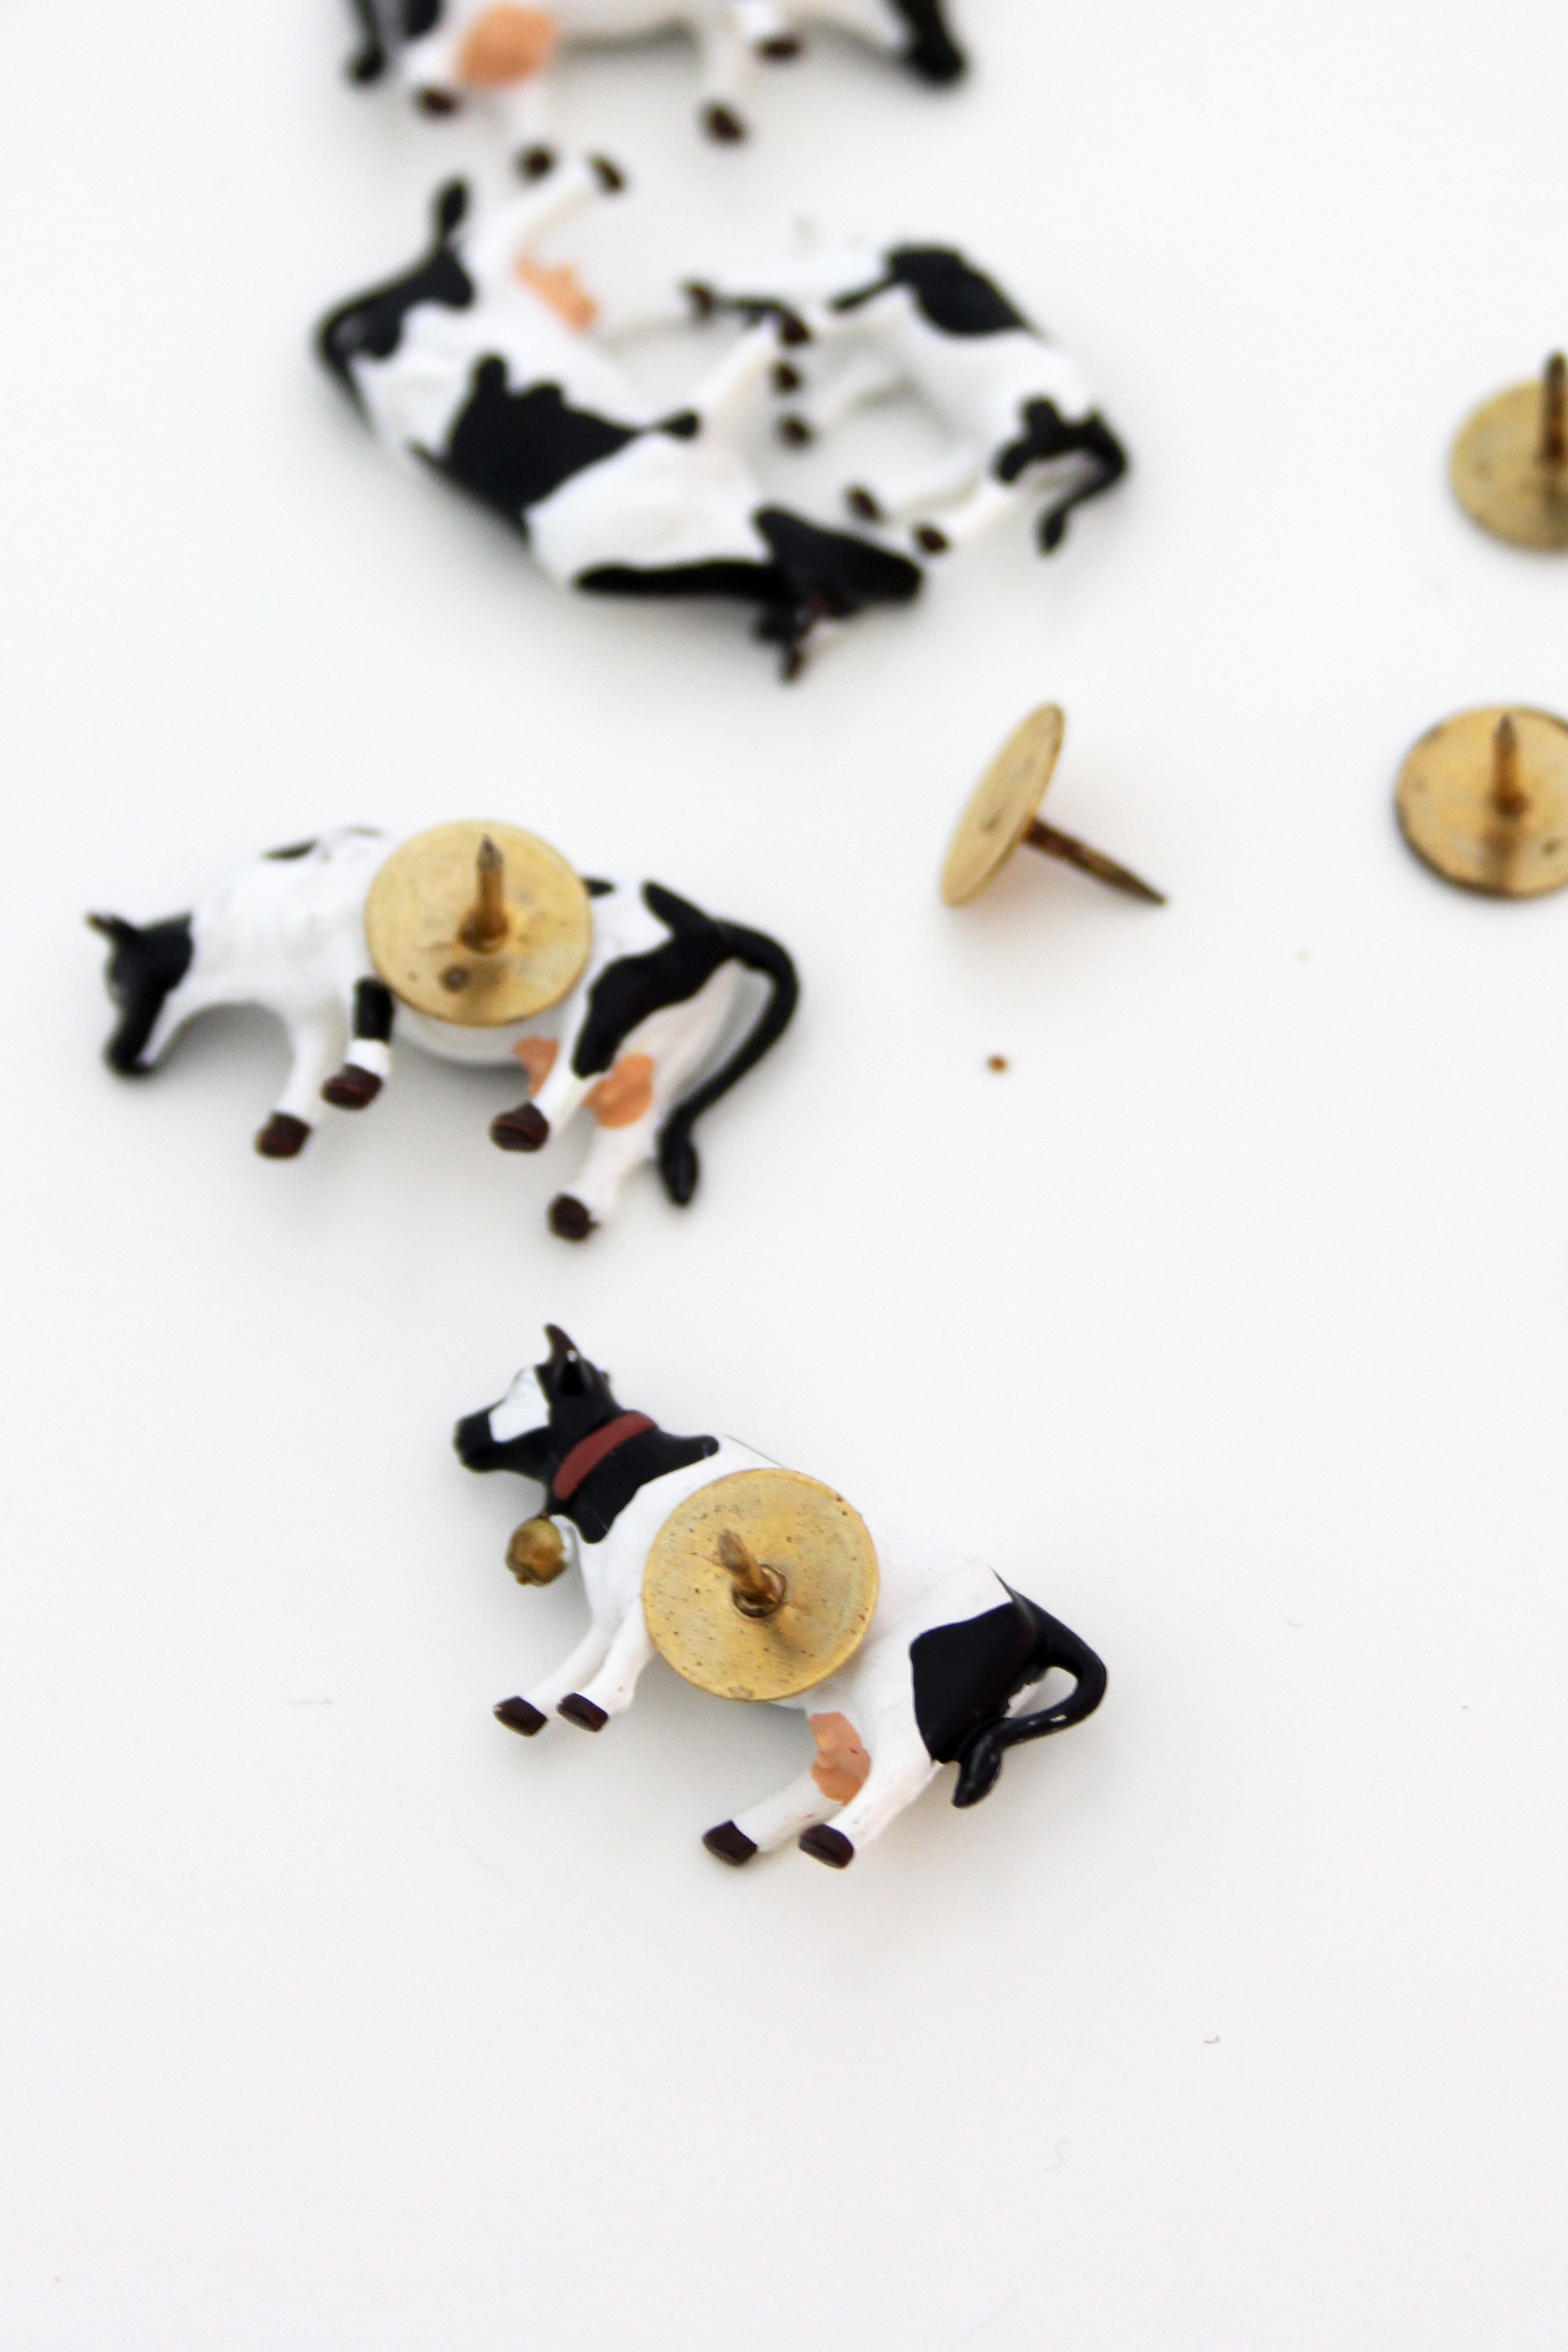 2) Make cow pins